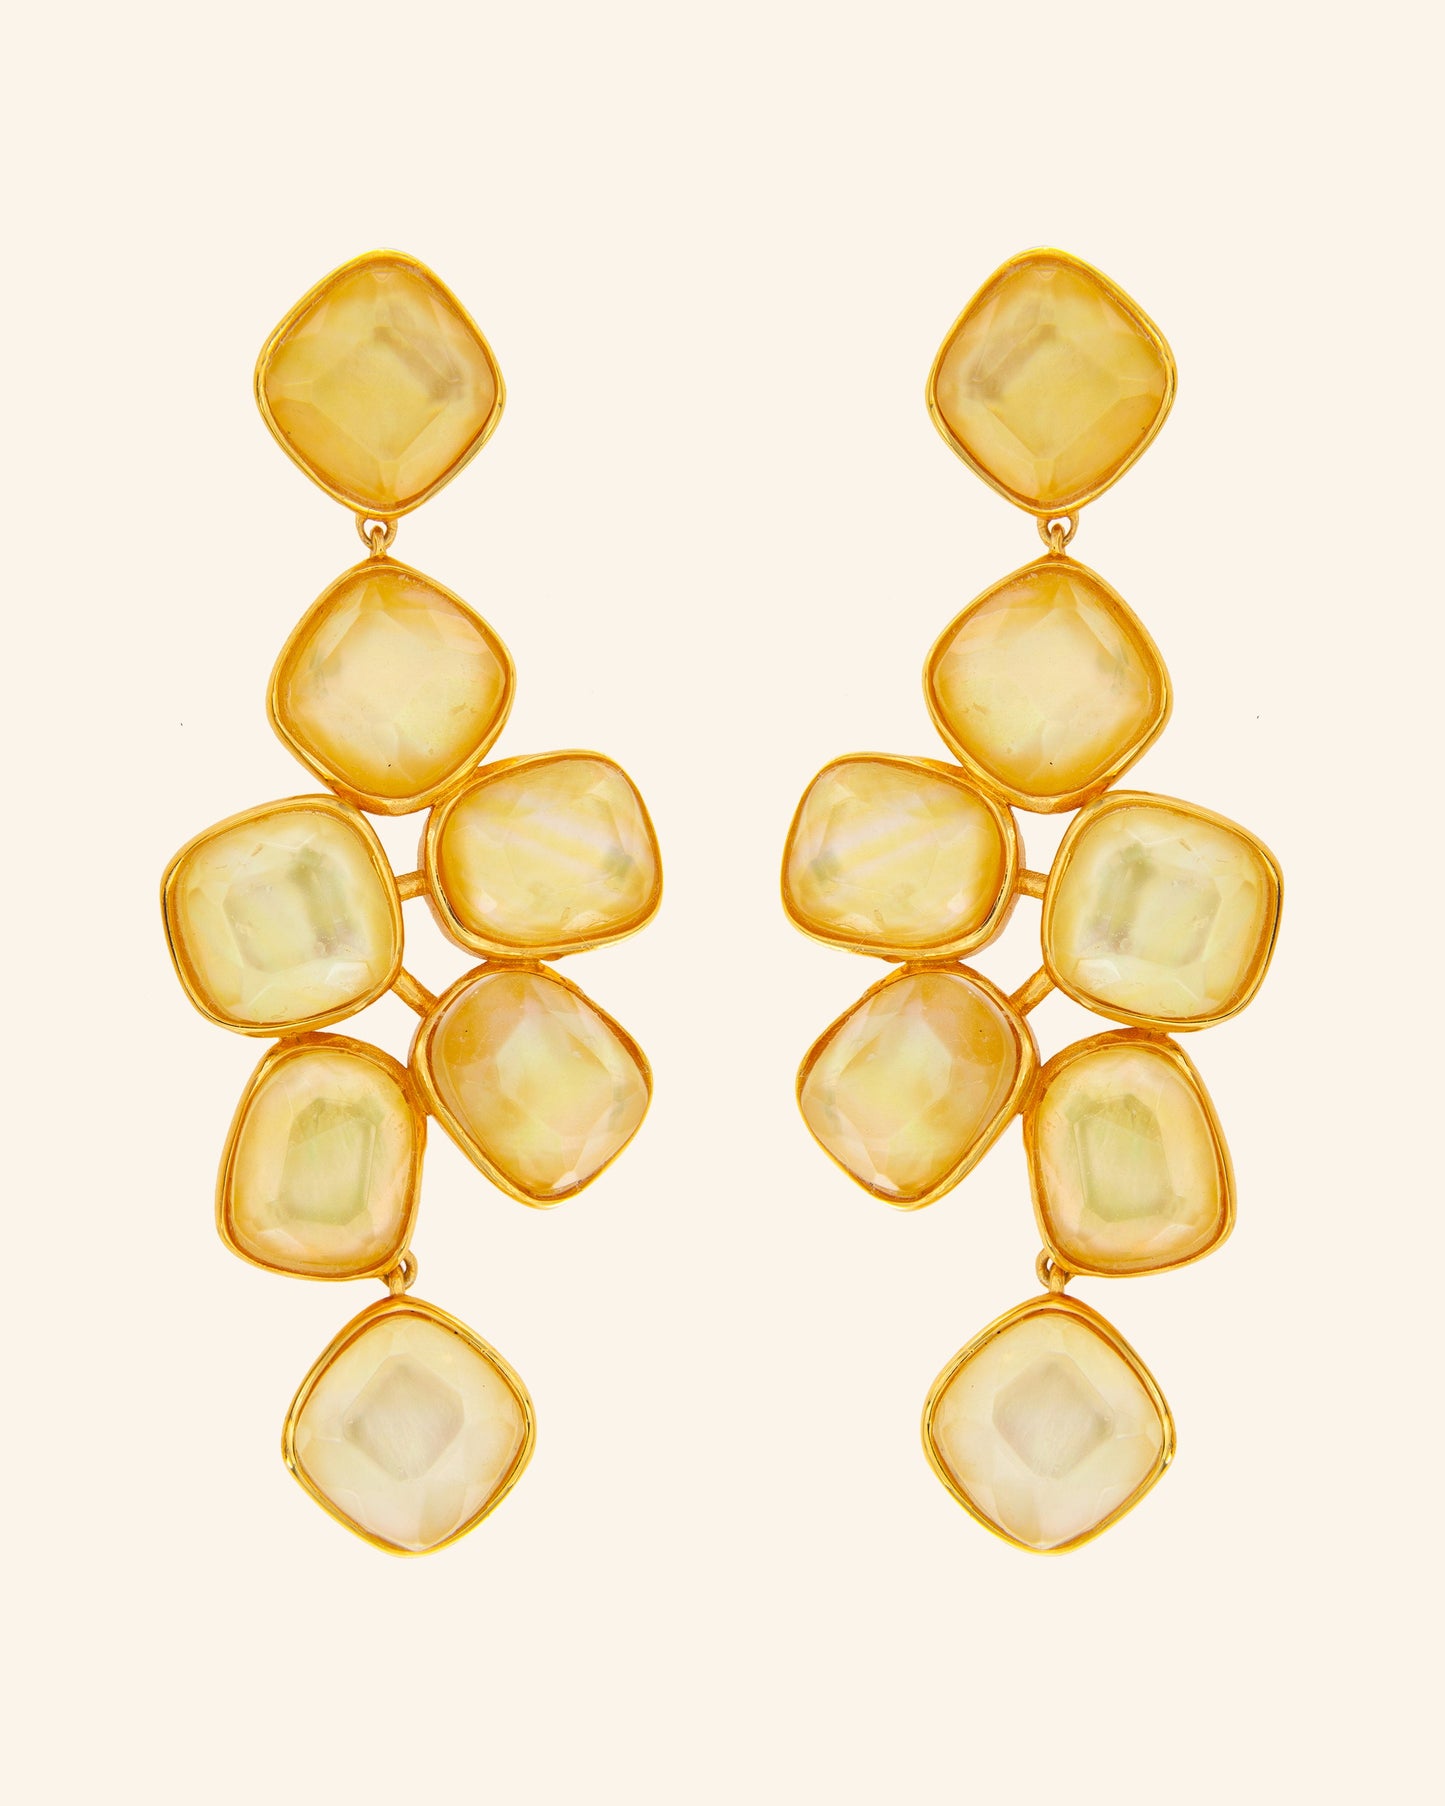 Golden Mother of Pearl Hydra Earrings